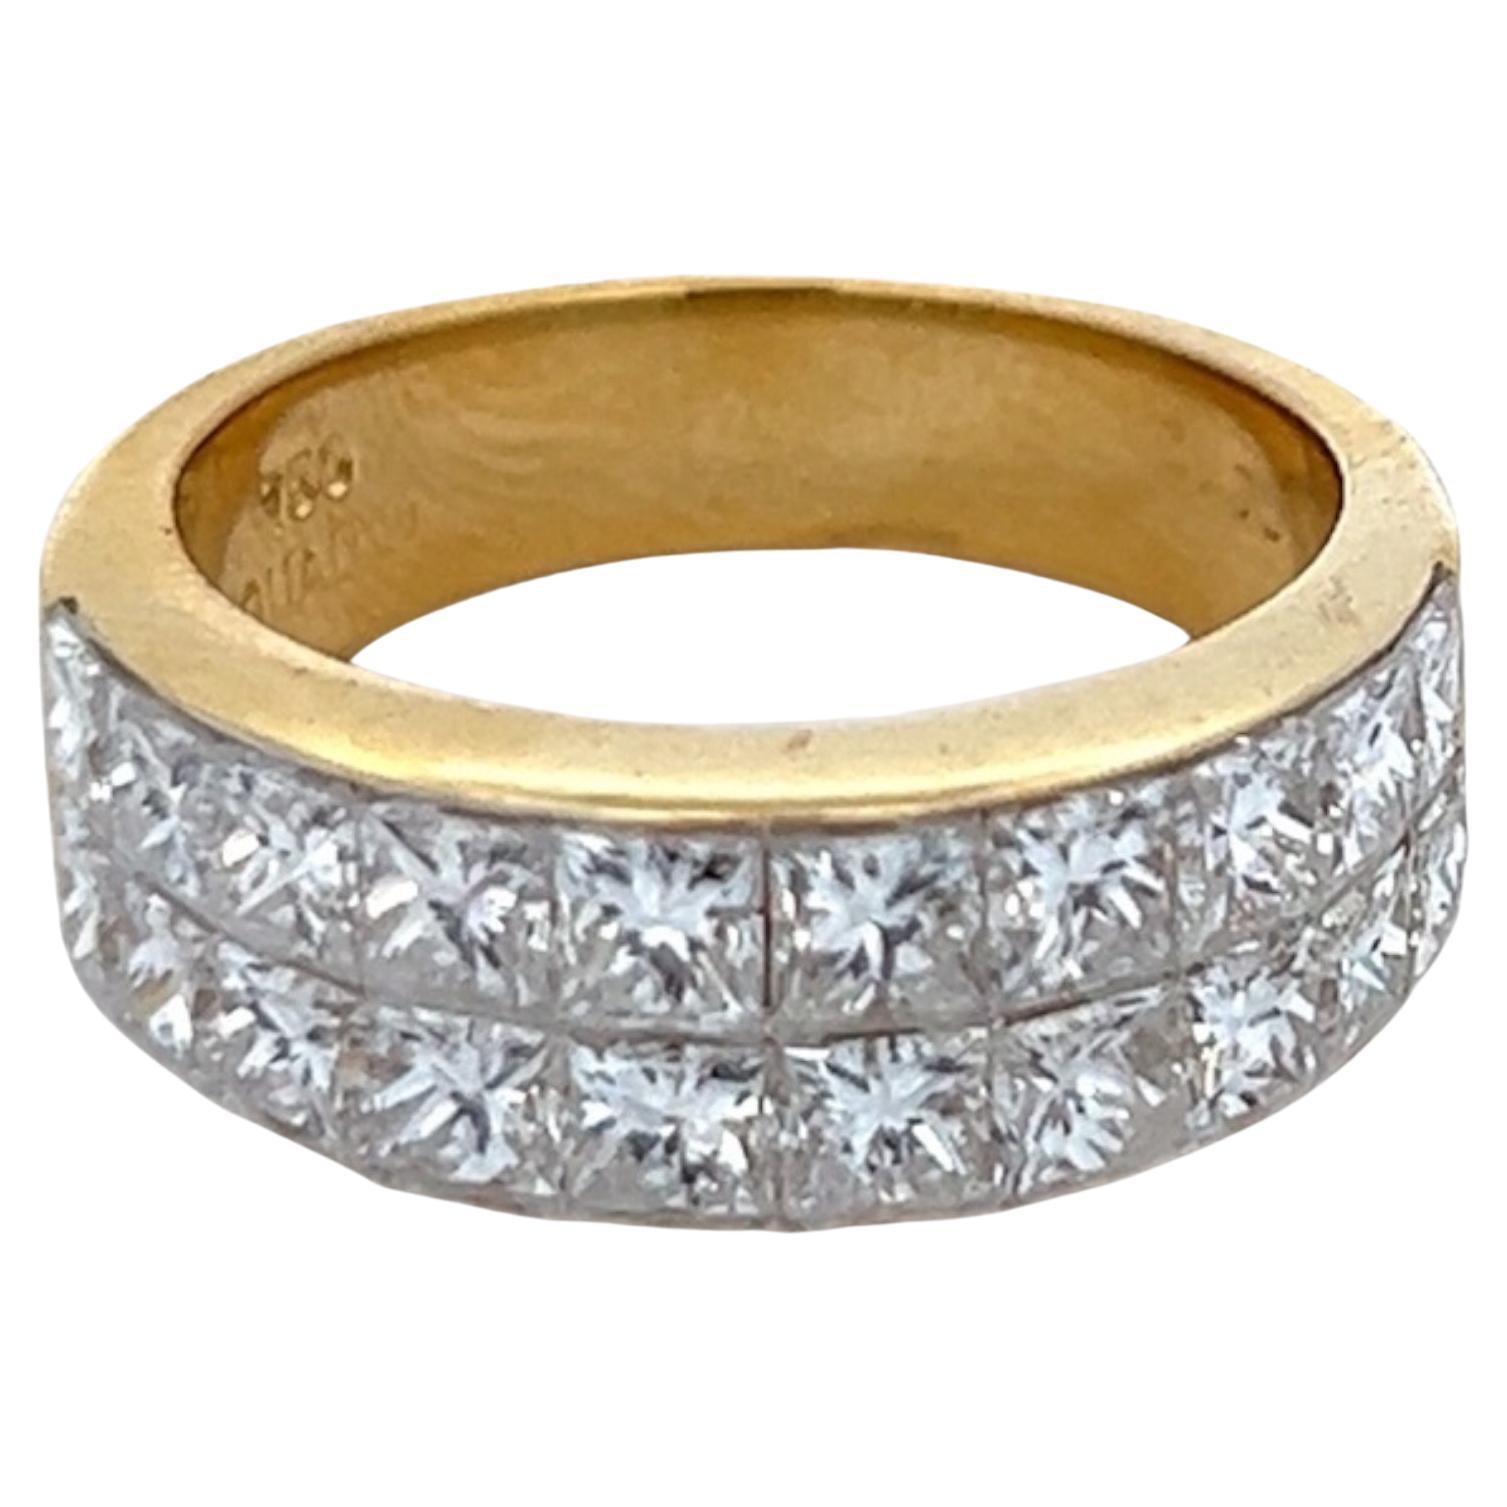 2.60ctw Princess Cut Diamond Invisibly Set 18k Yellow Gold Wedding Band Ring